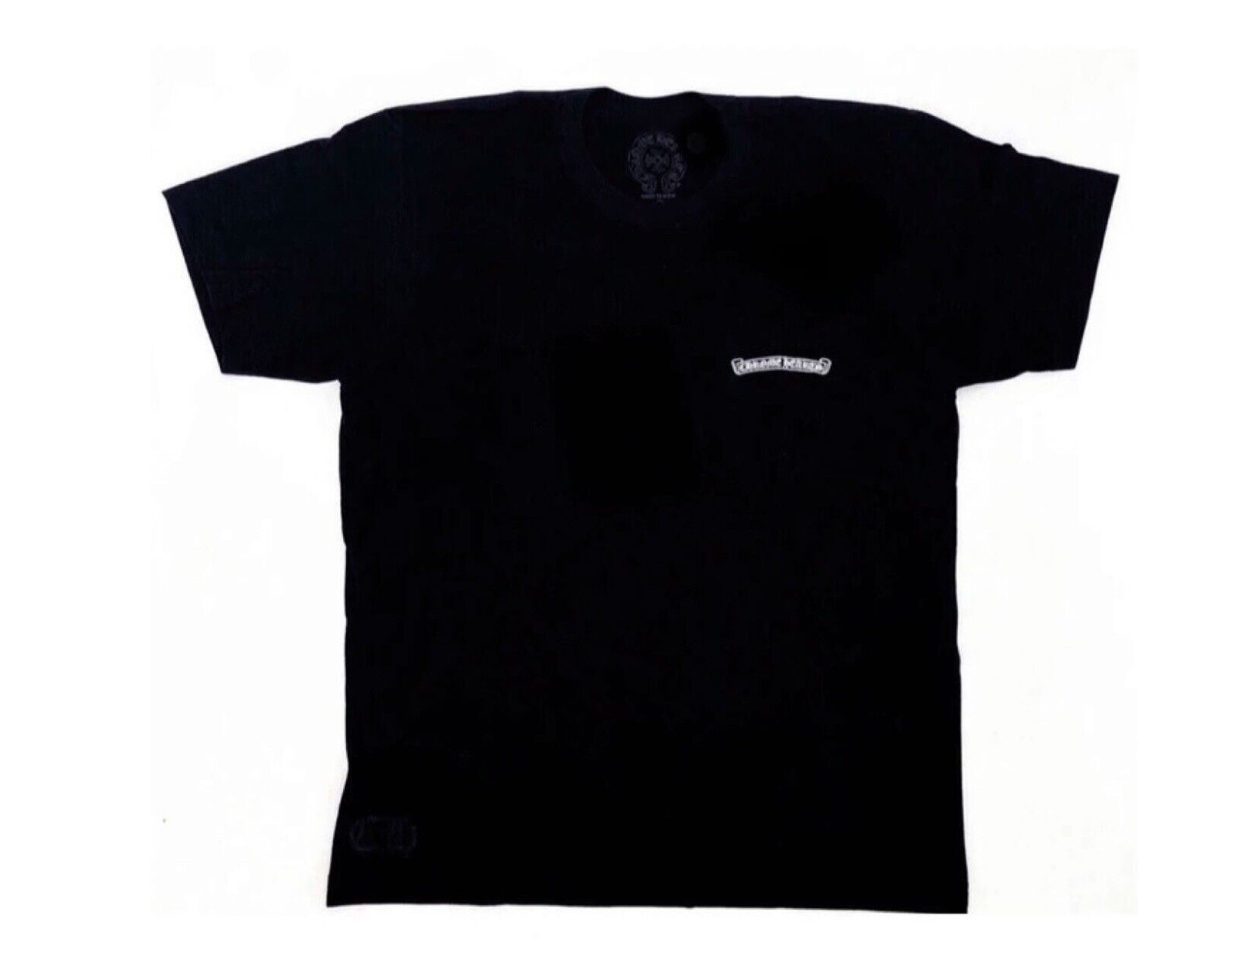 Chrome Hearts Miami Exclusive T-Shirt Black